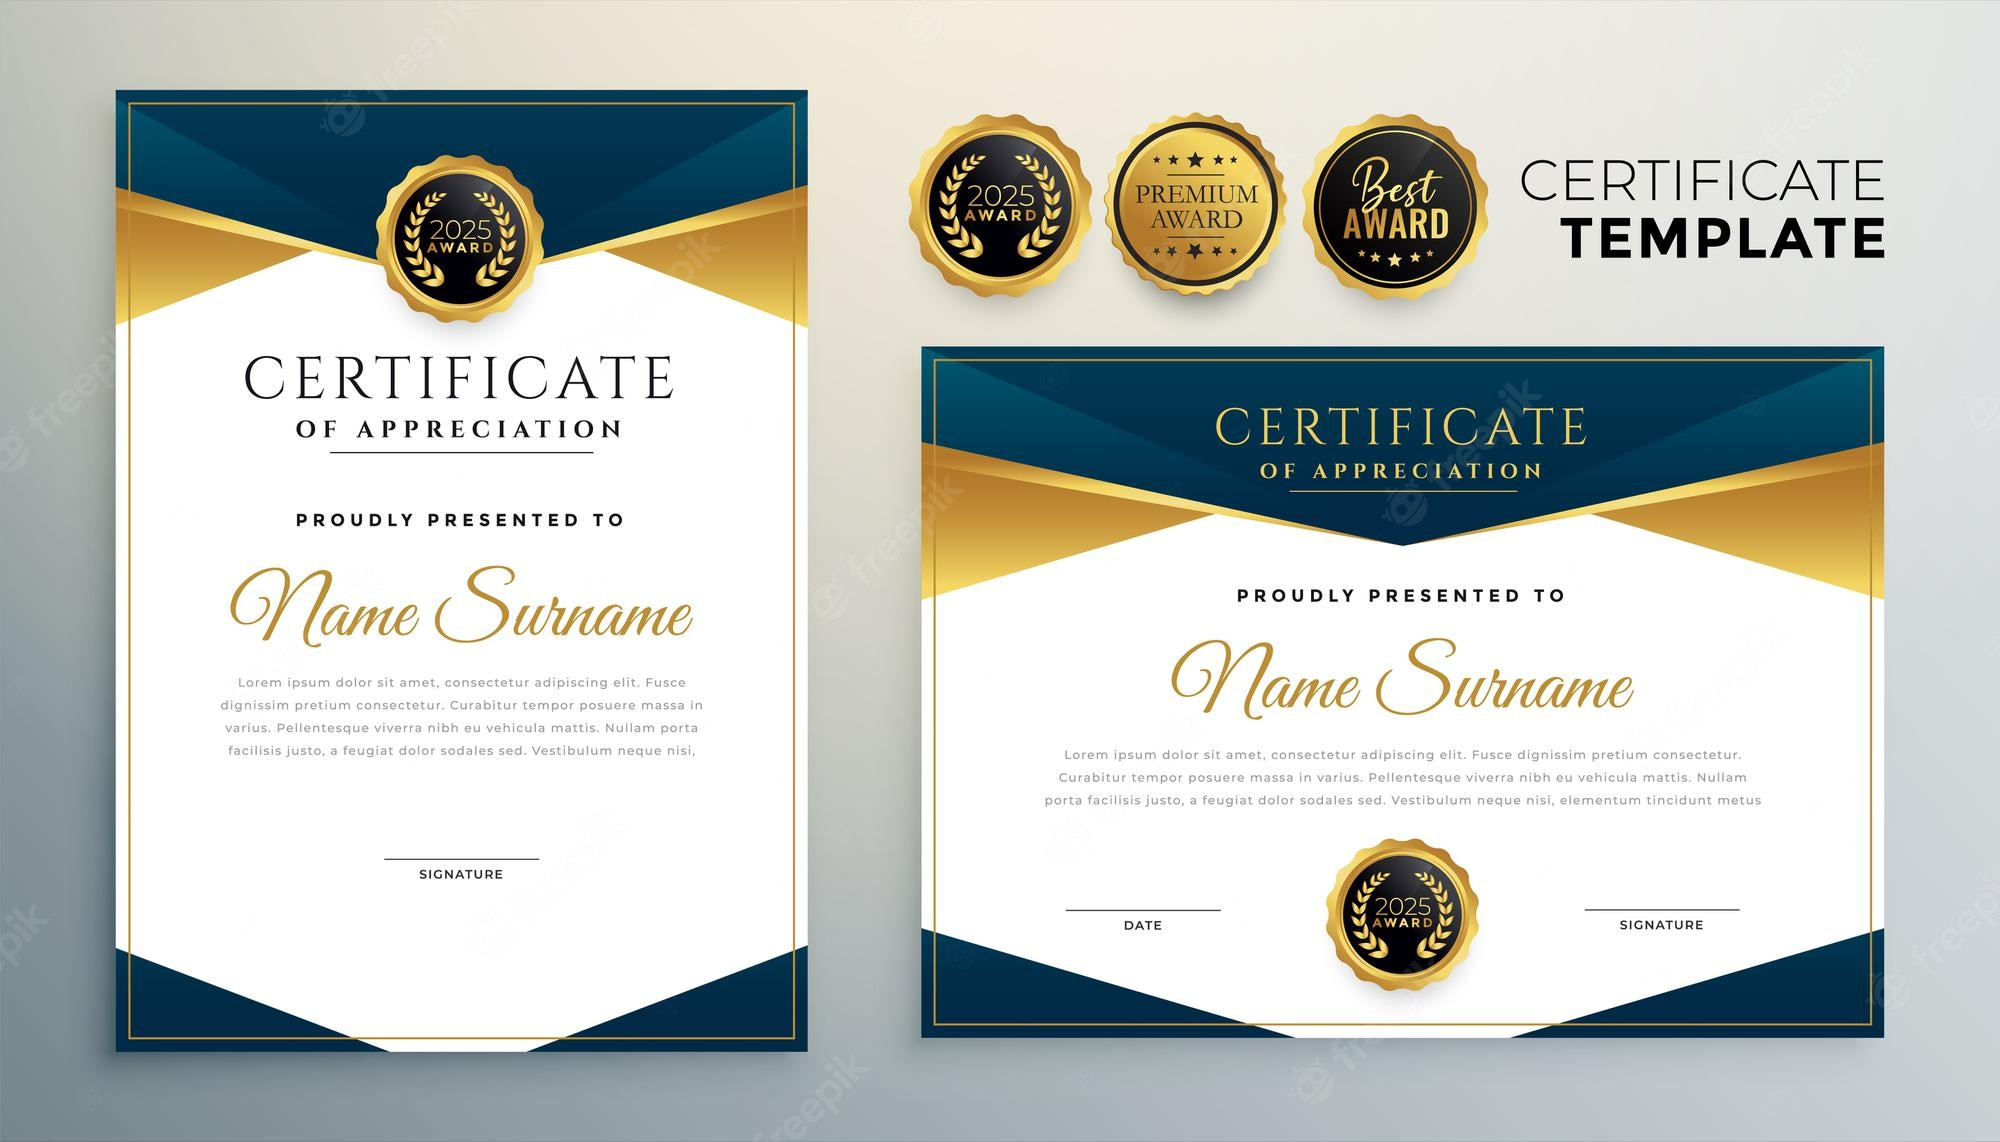 Certificate Images - Free Download on Freepik Regarding Formal Certificate Of Appreciation Template